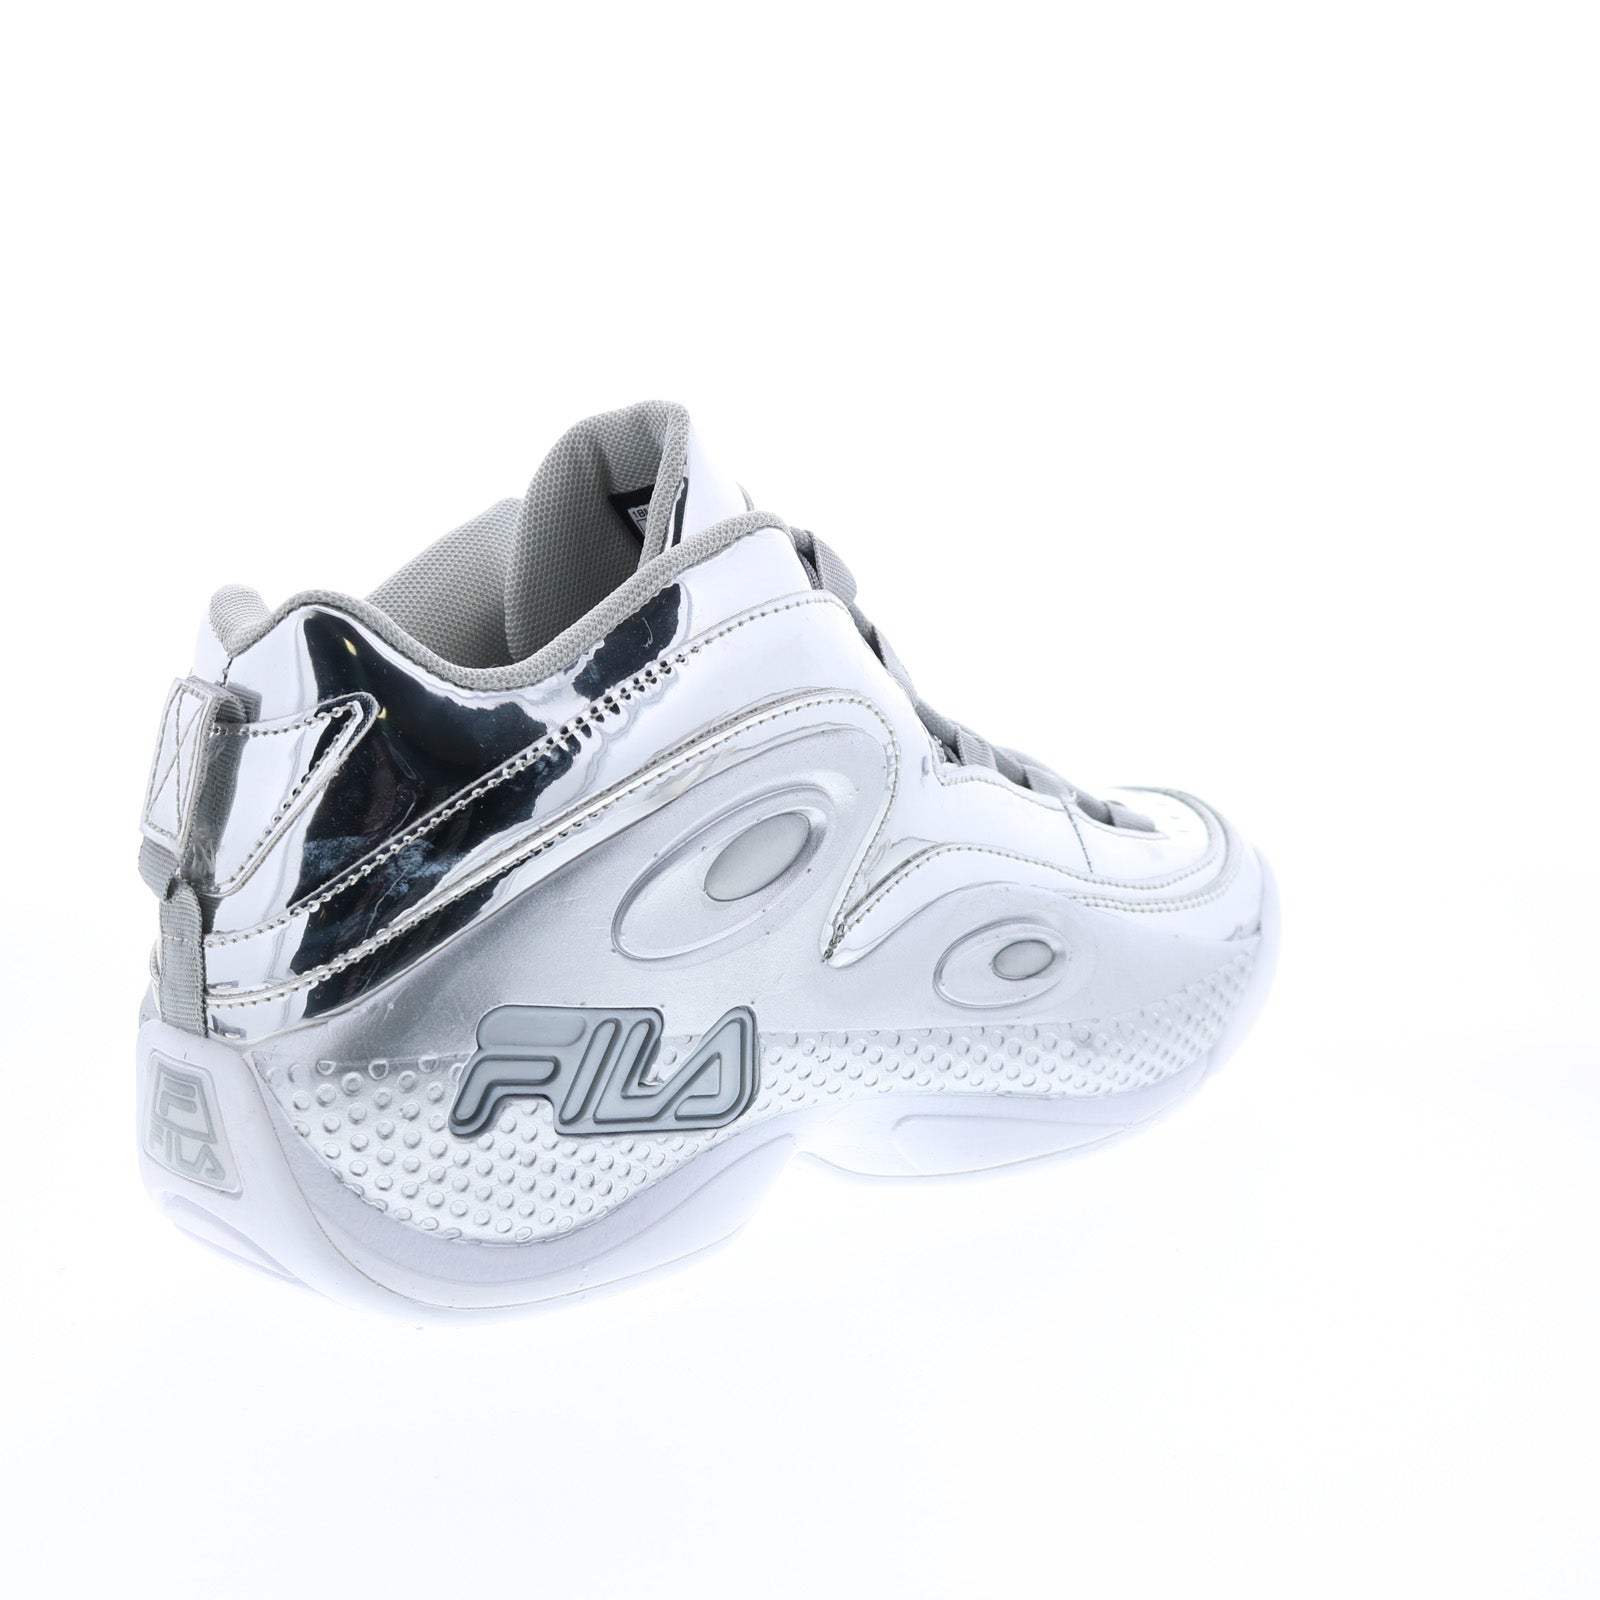 Fila Men's Grant Hill 3 Athletic Basketball Shoes 1BM01289-027 US 13 M